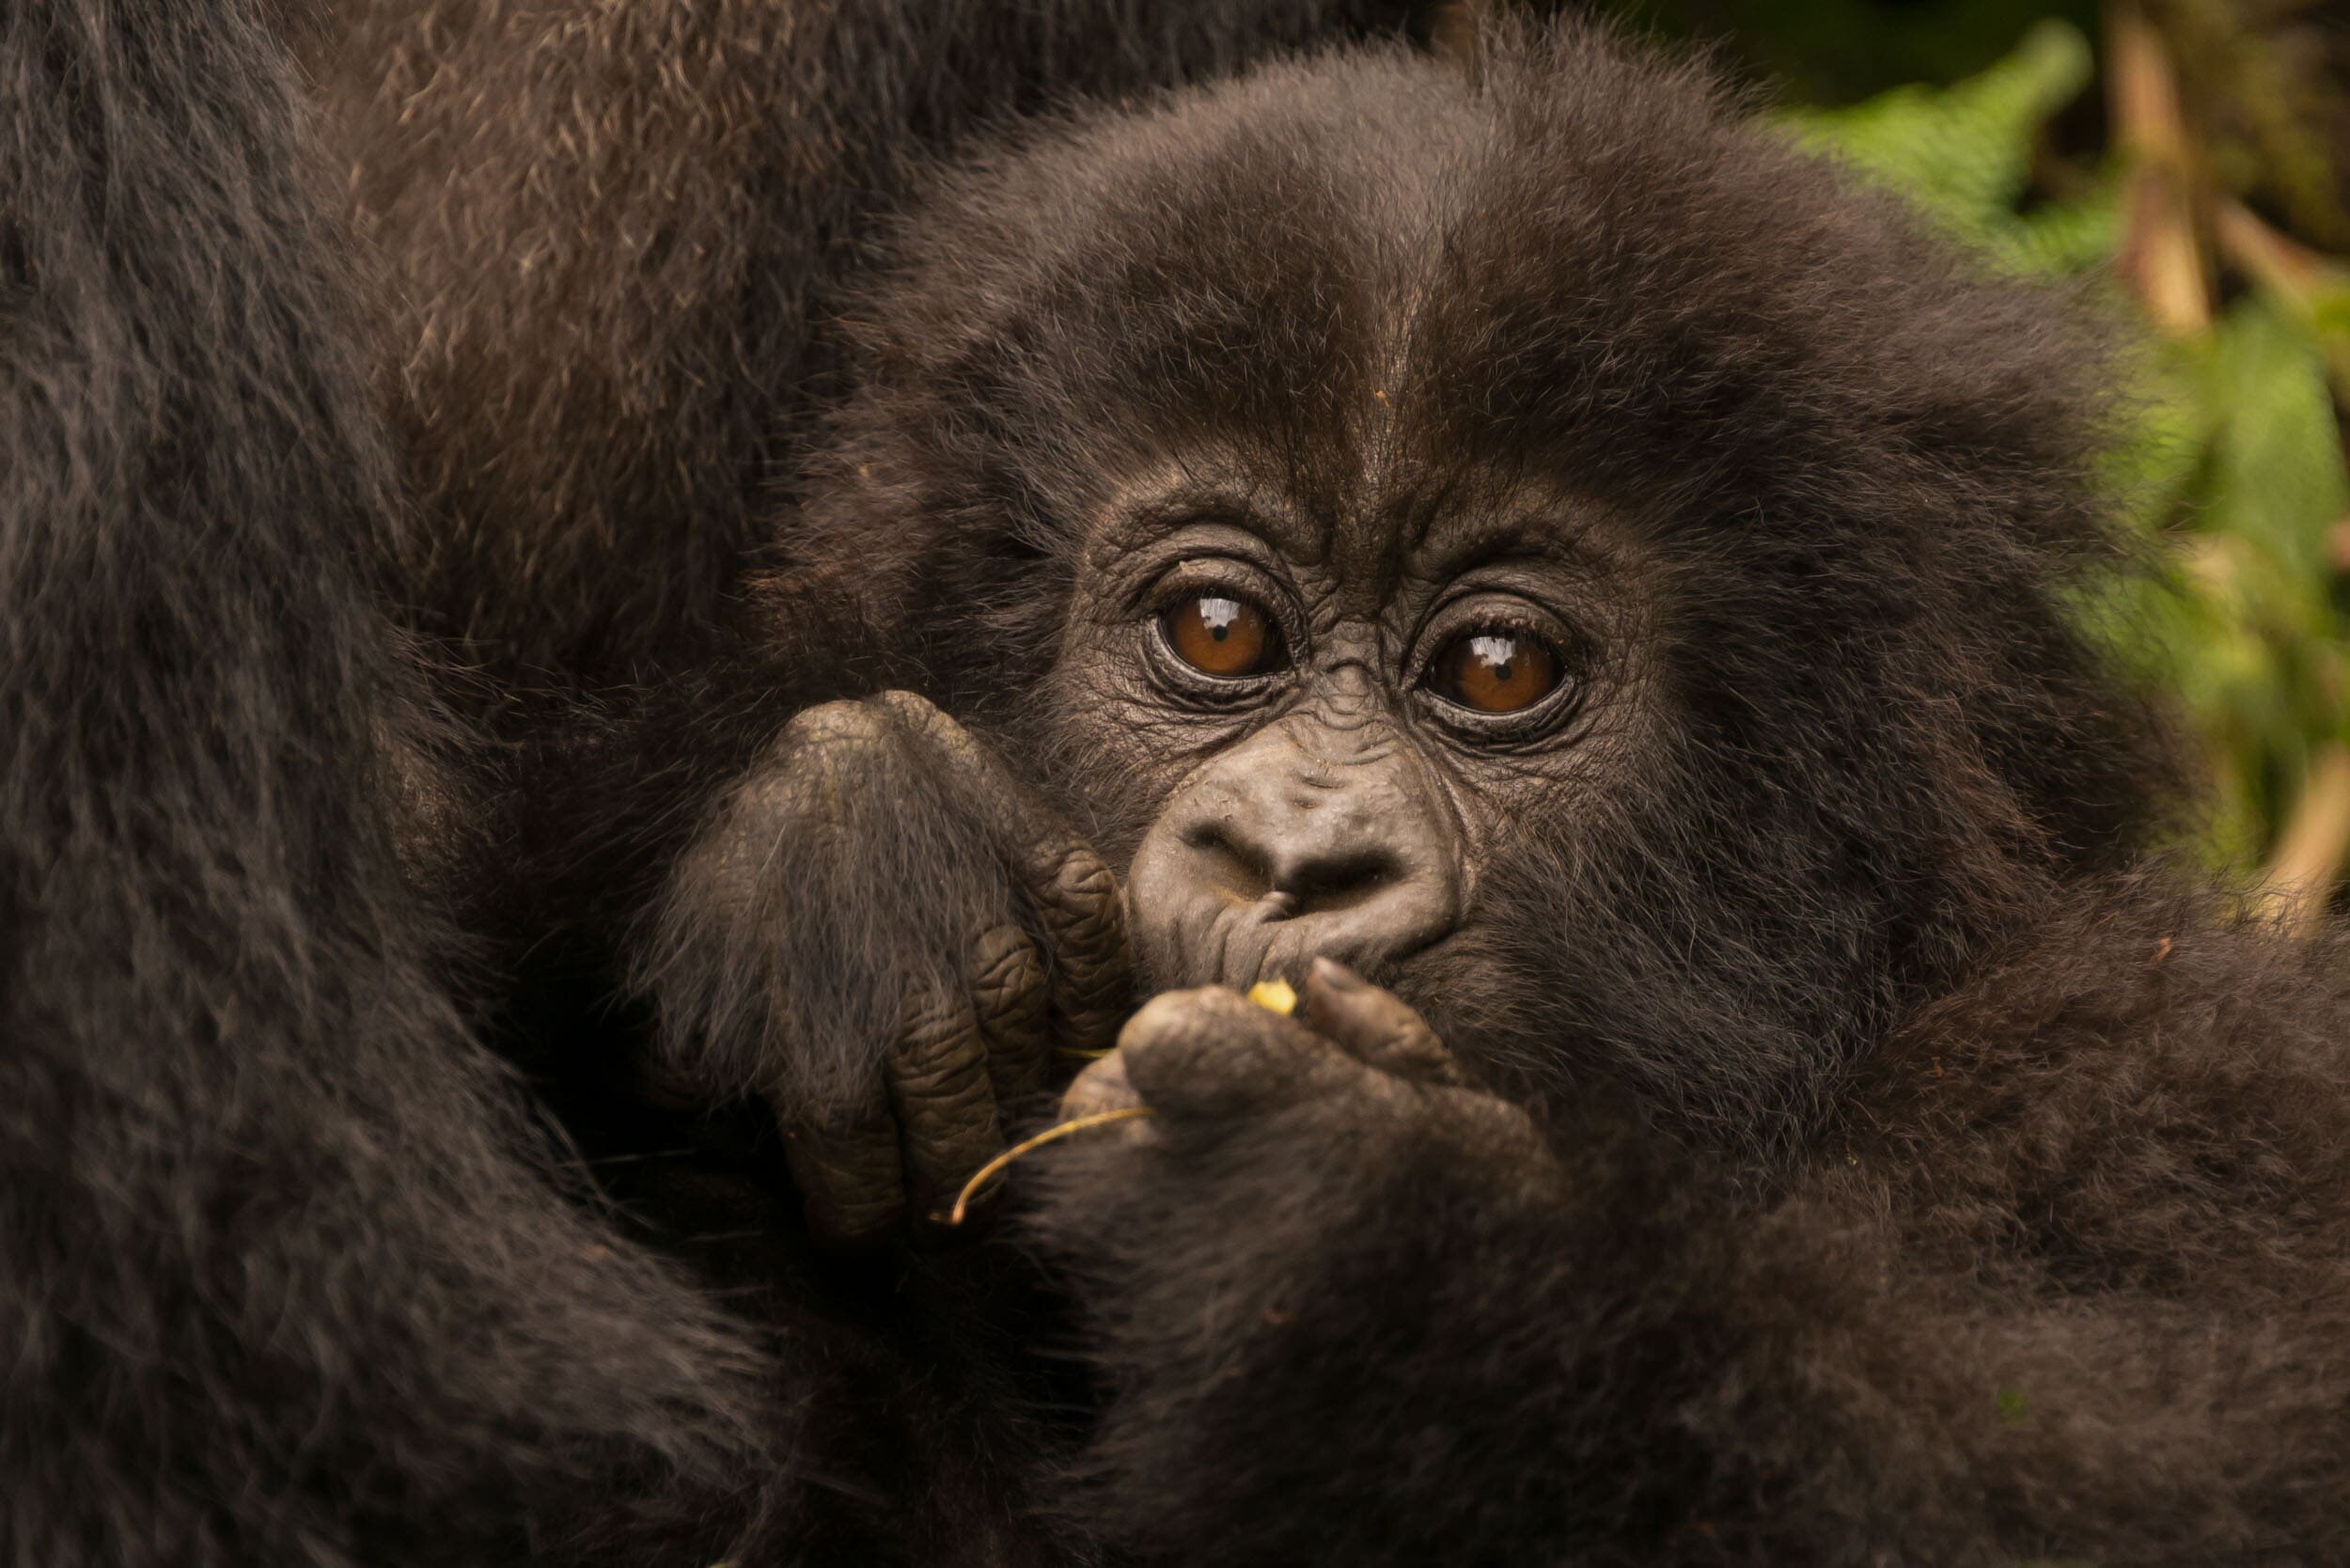 Baby gorilla held by mother chews branch: 56 downloads